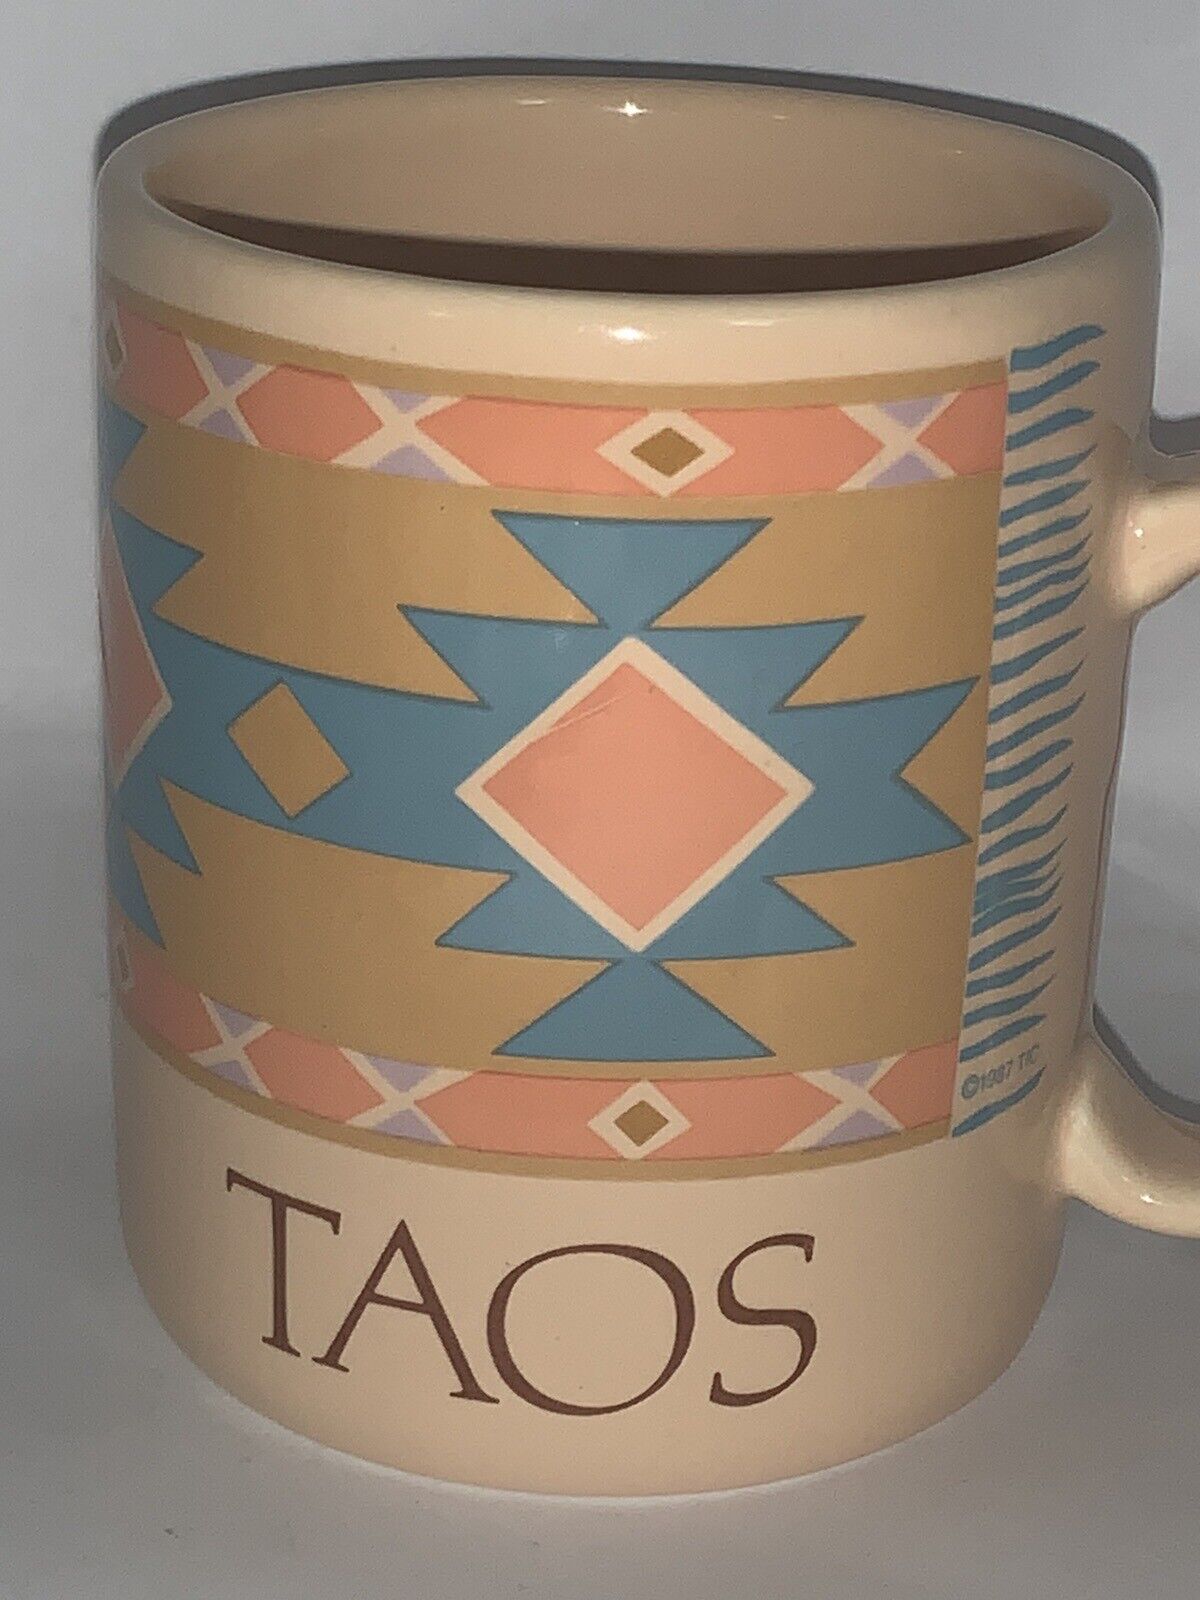 TAOS NEW MEXICO COFFEE MUG CUP TEA